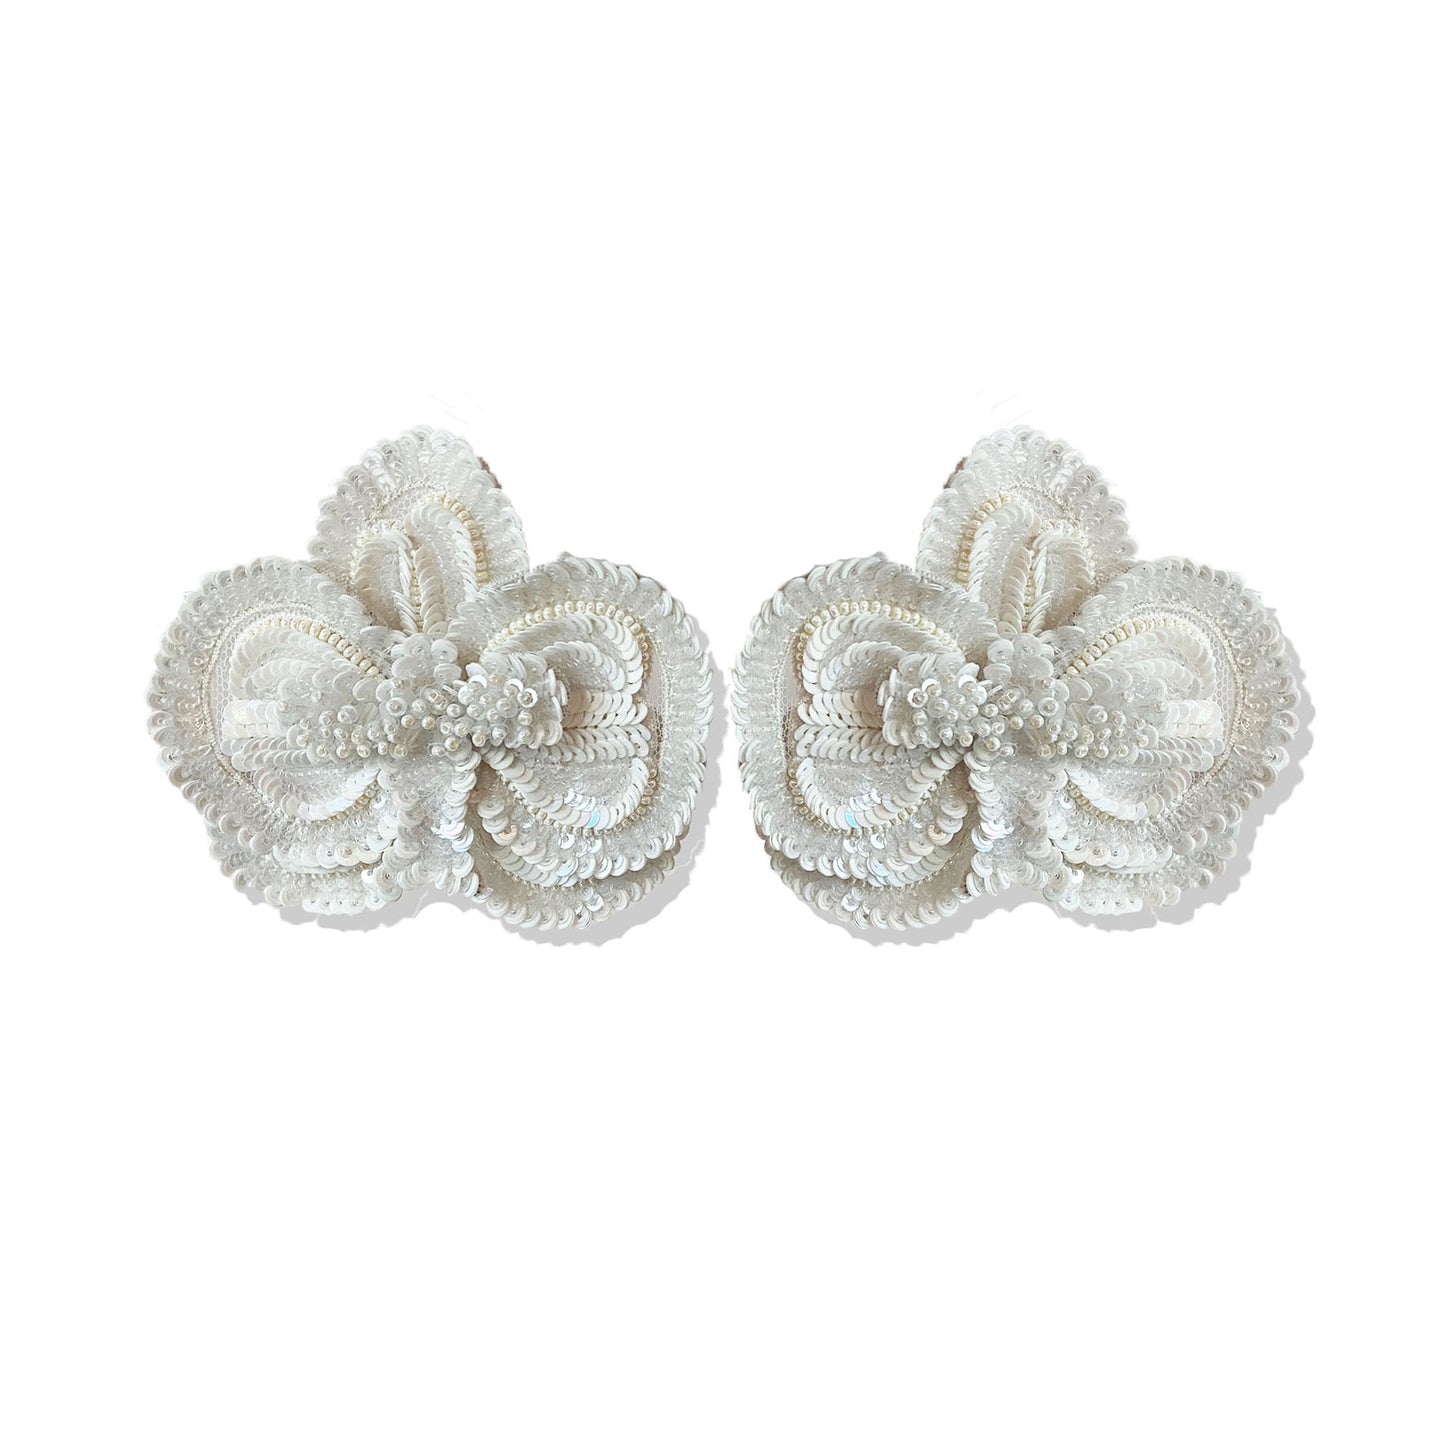 White Orchid Earrings